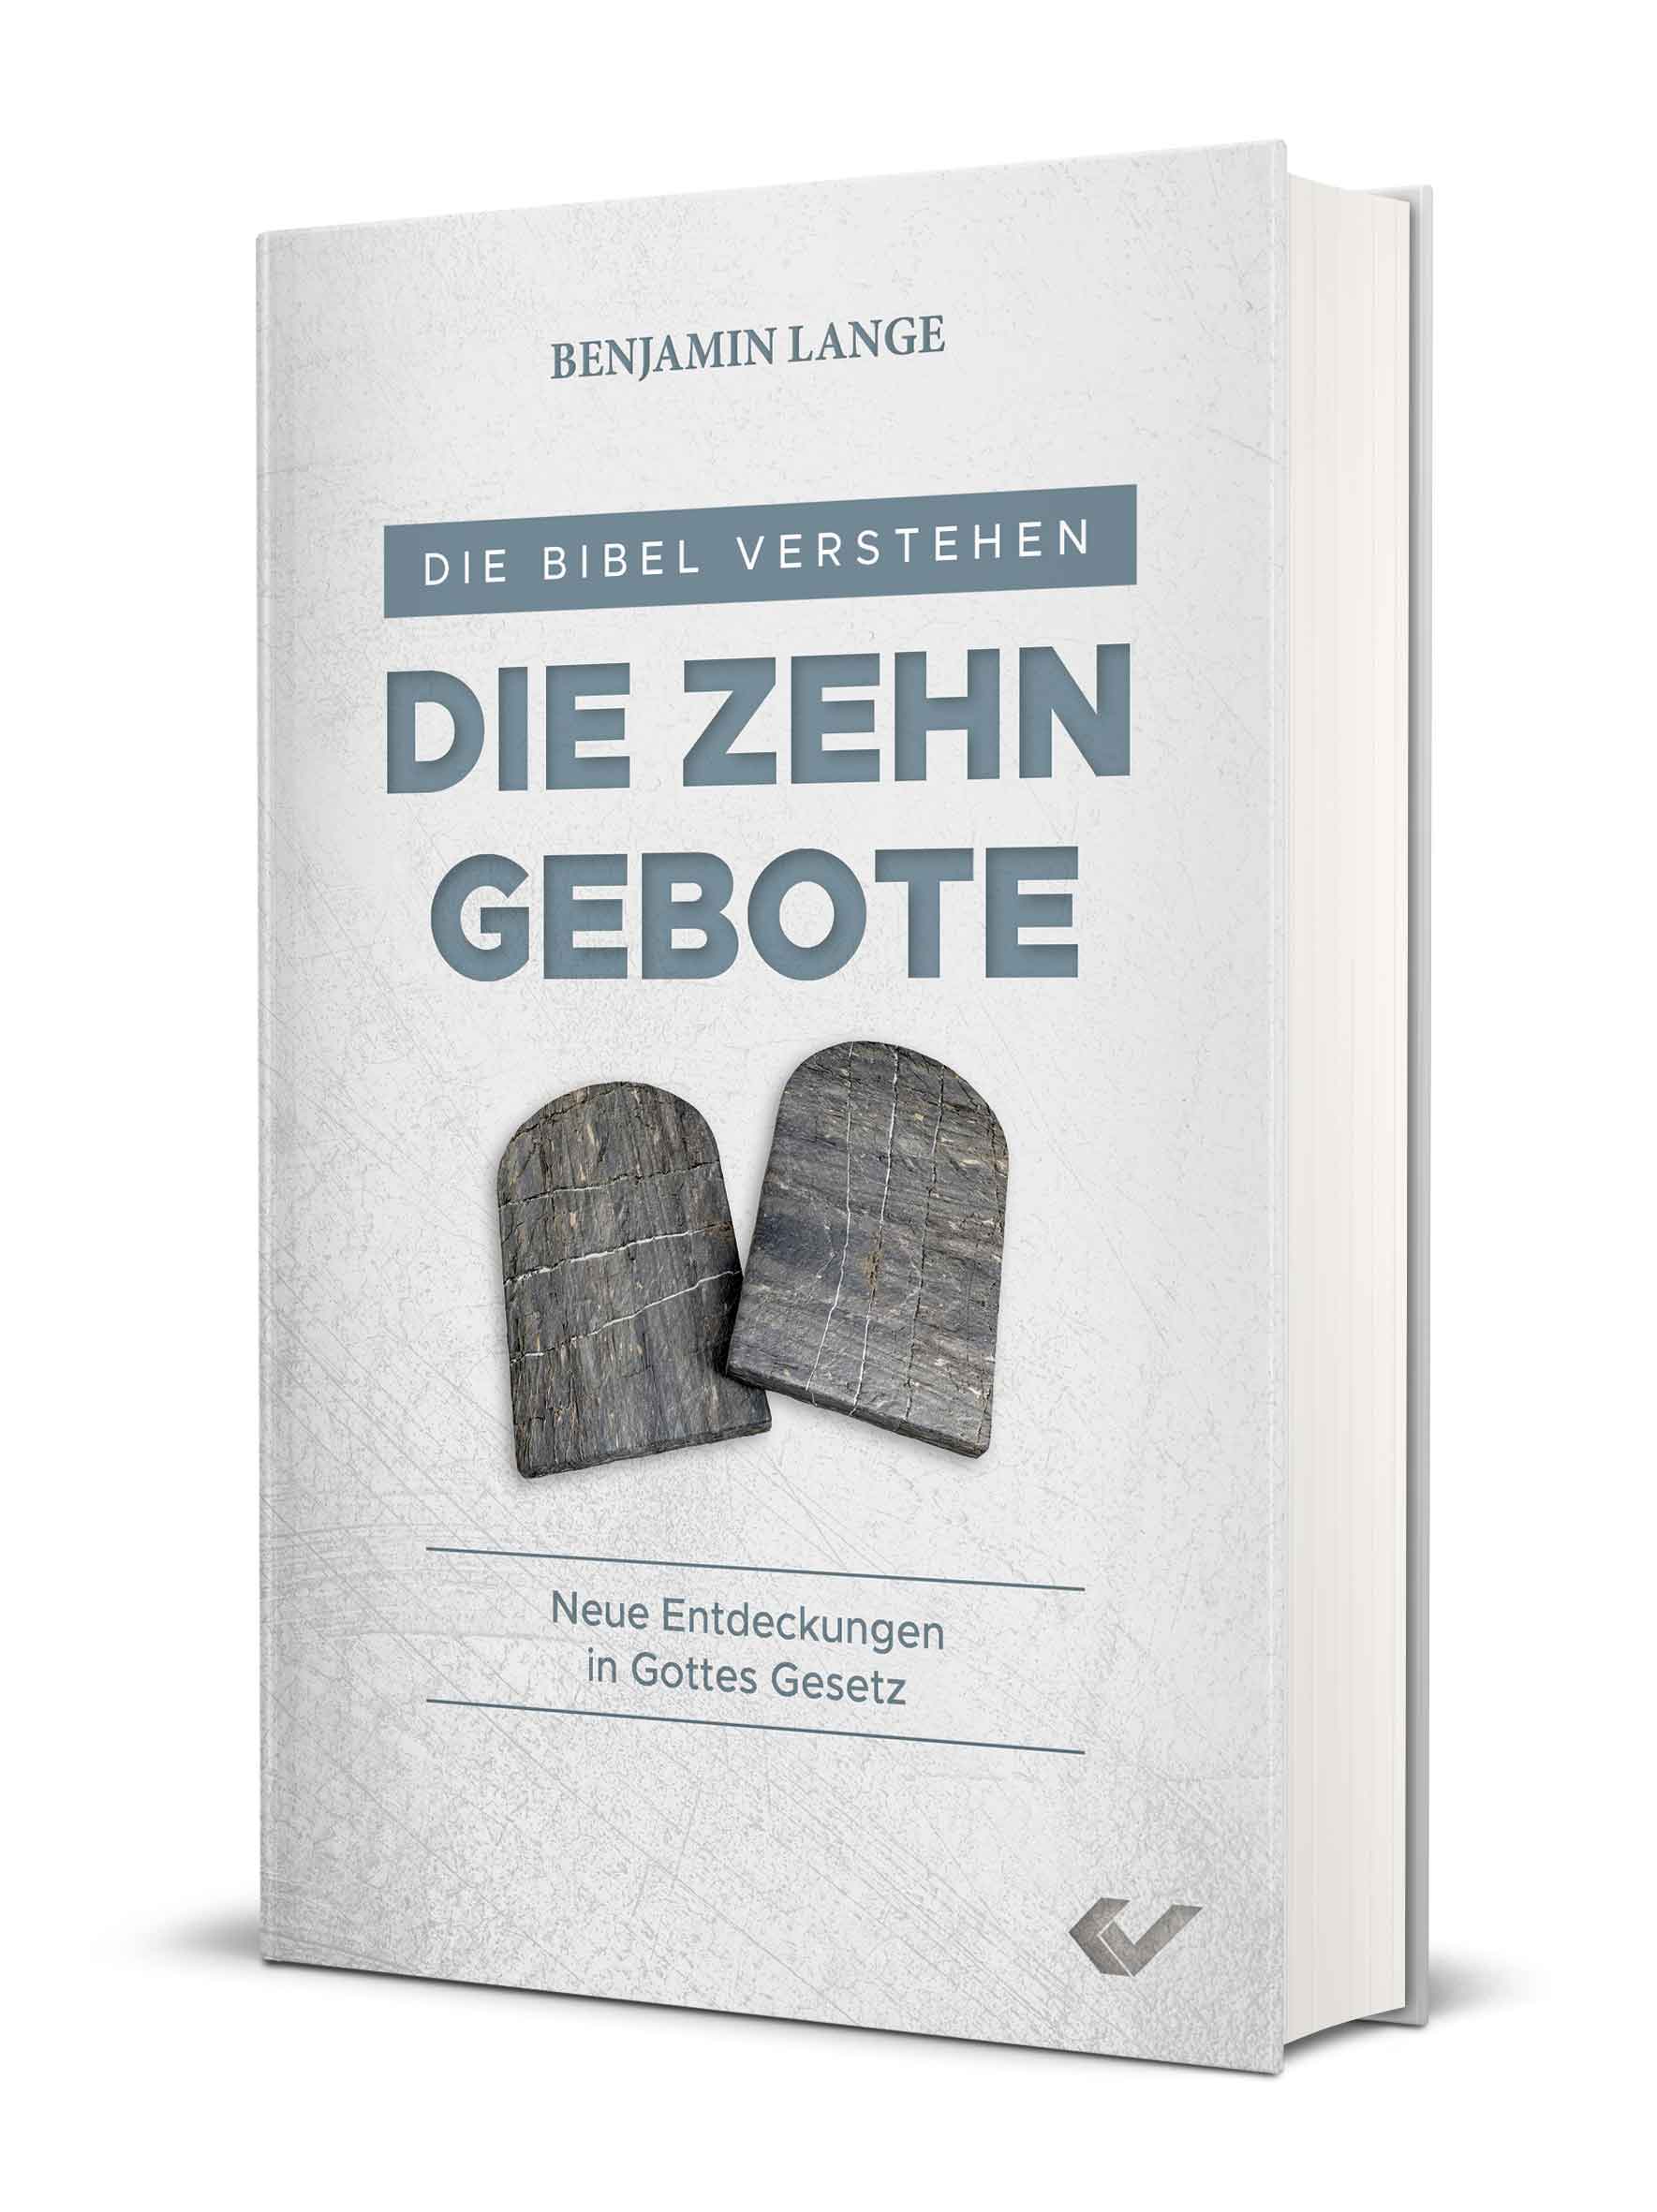 Benjamin Lange: Die Bibel verstehen: Die Zehn Gebote - Neue Entdeckungen in Gottes Gesetz